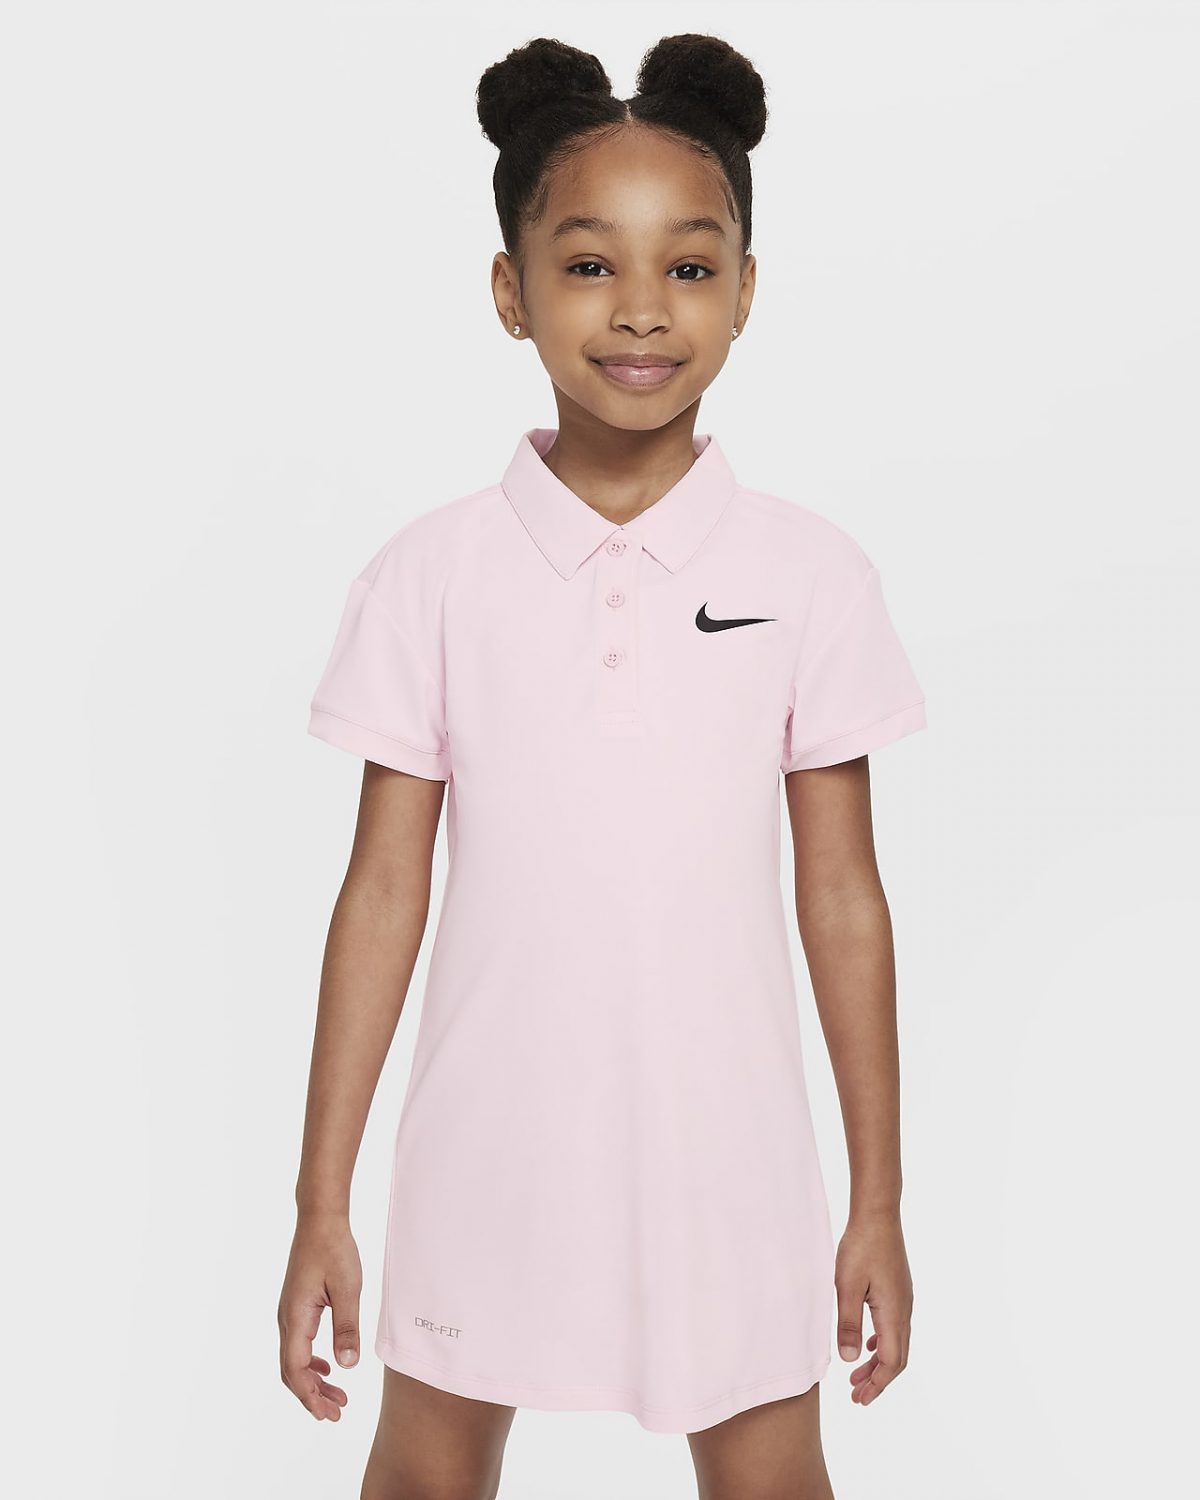 Детская платье Nike polo Dri-FIT фото